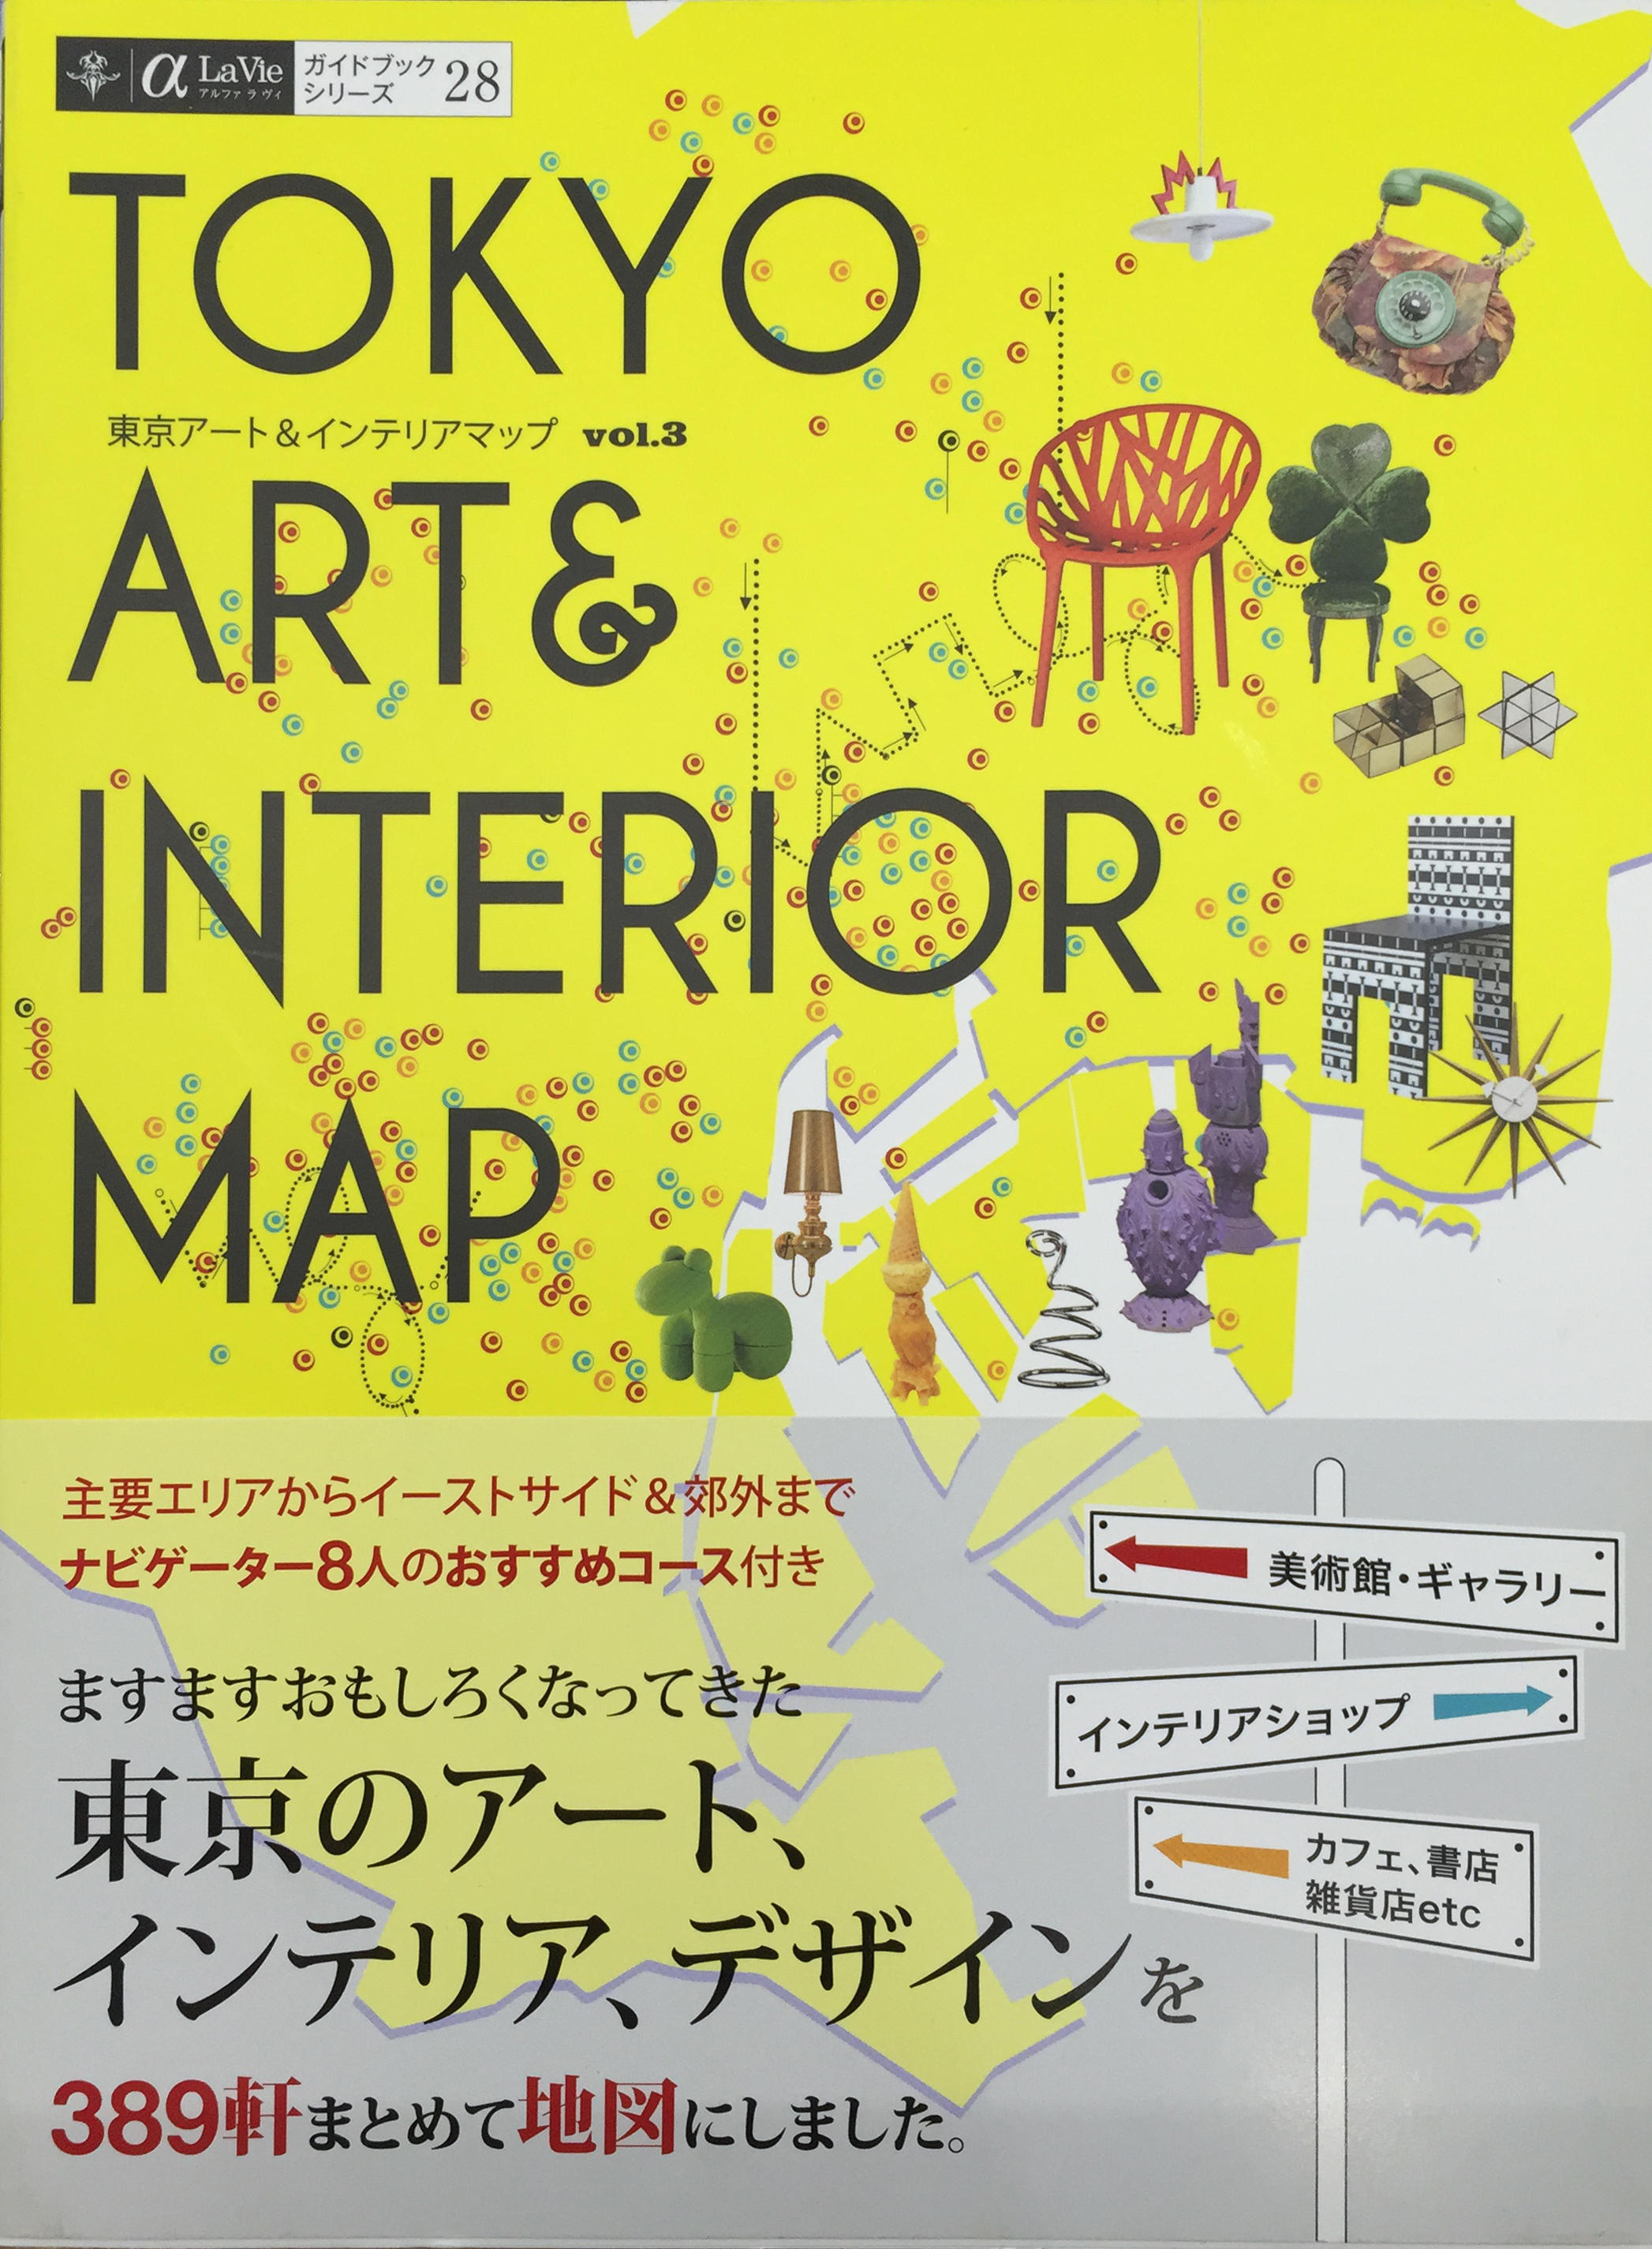 Tokyo Art & Interior Map  東京アート&インテリアマップ vol.3